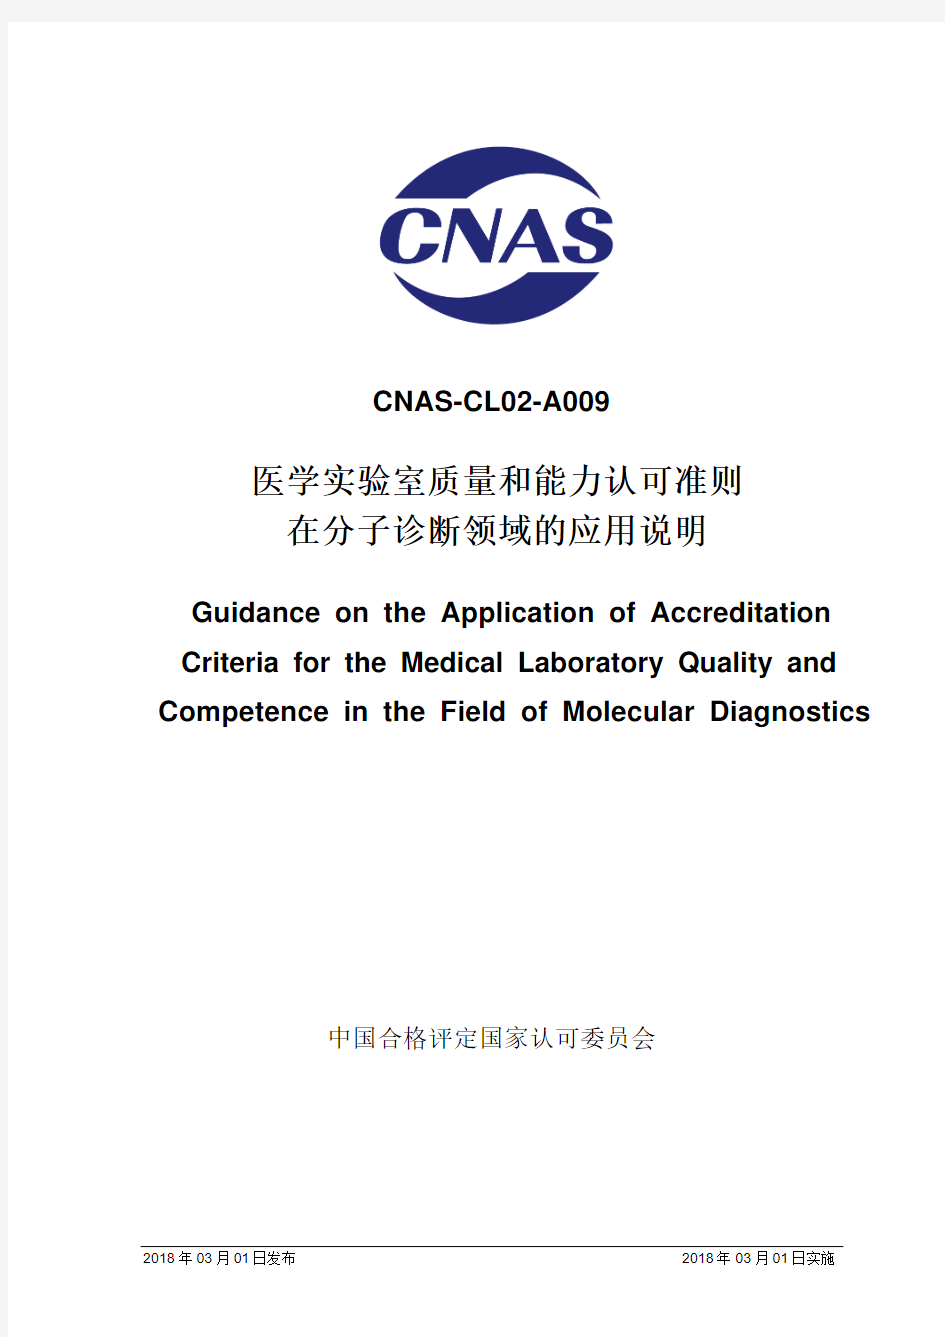 CNAS-CL02-A009：2018《医学实验室质量和能力认可准则在分子诊断领域的应用说明》